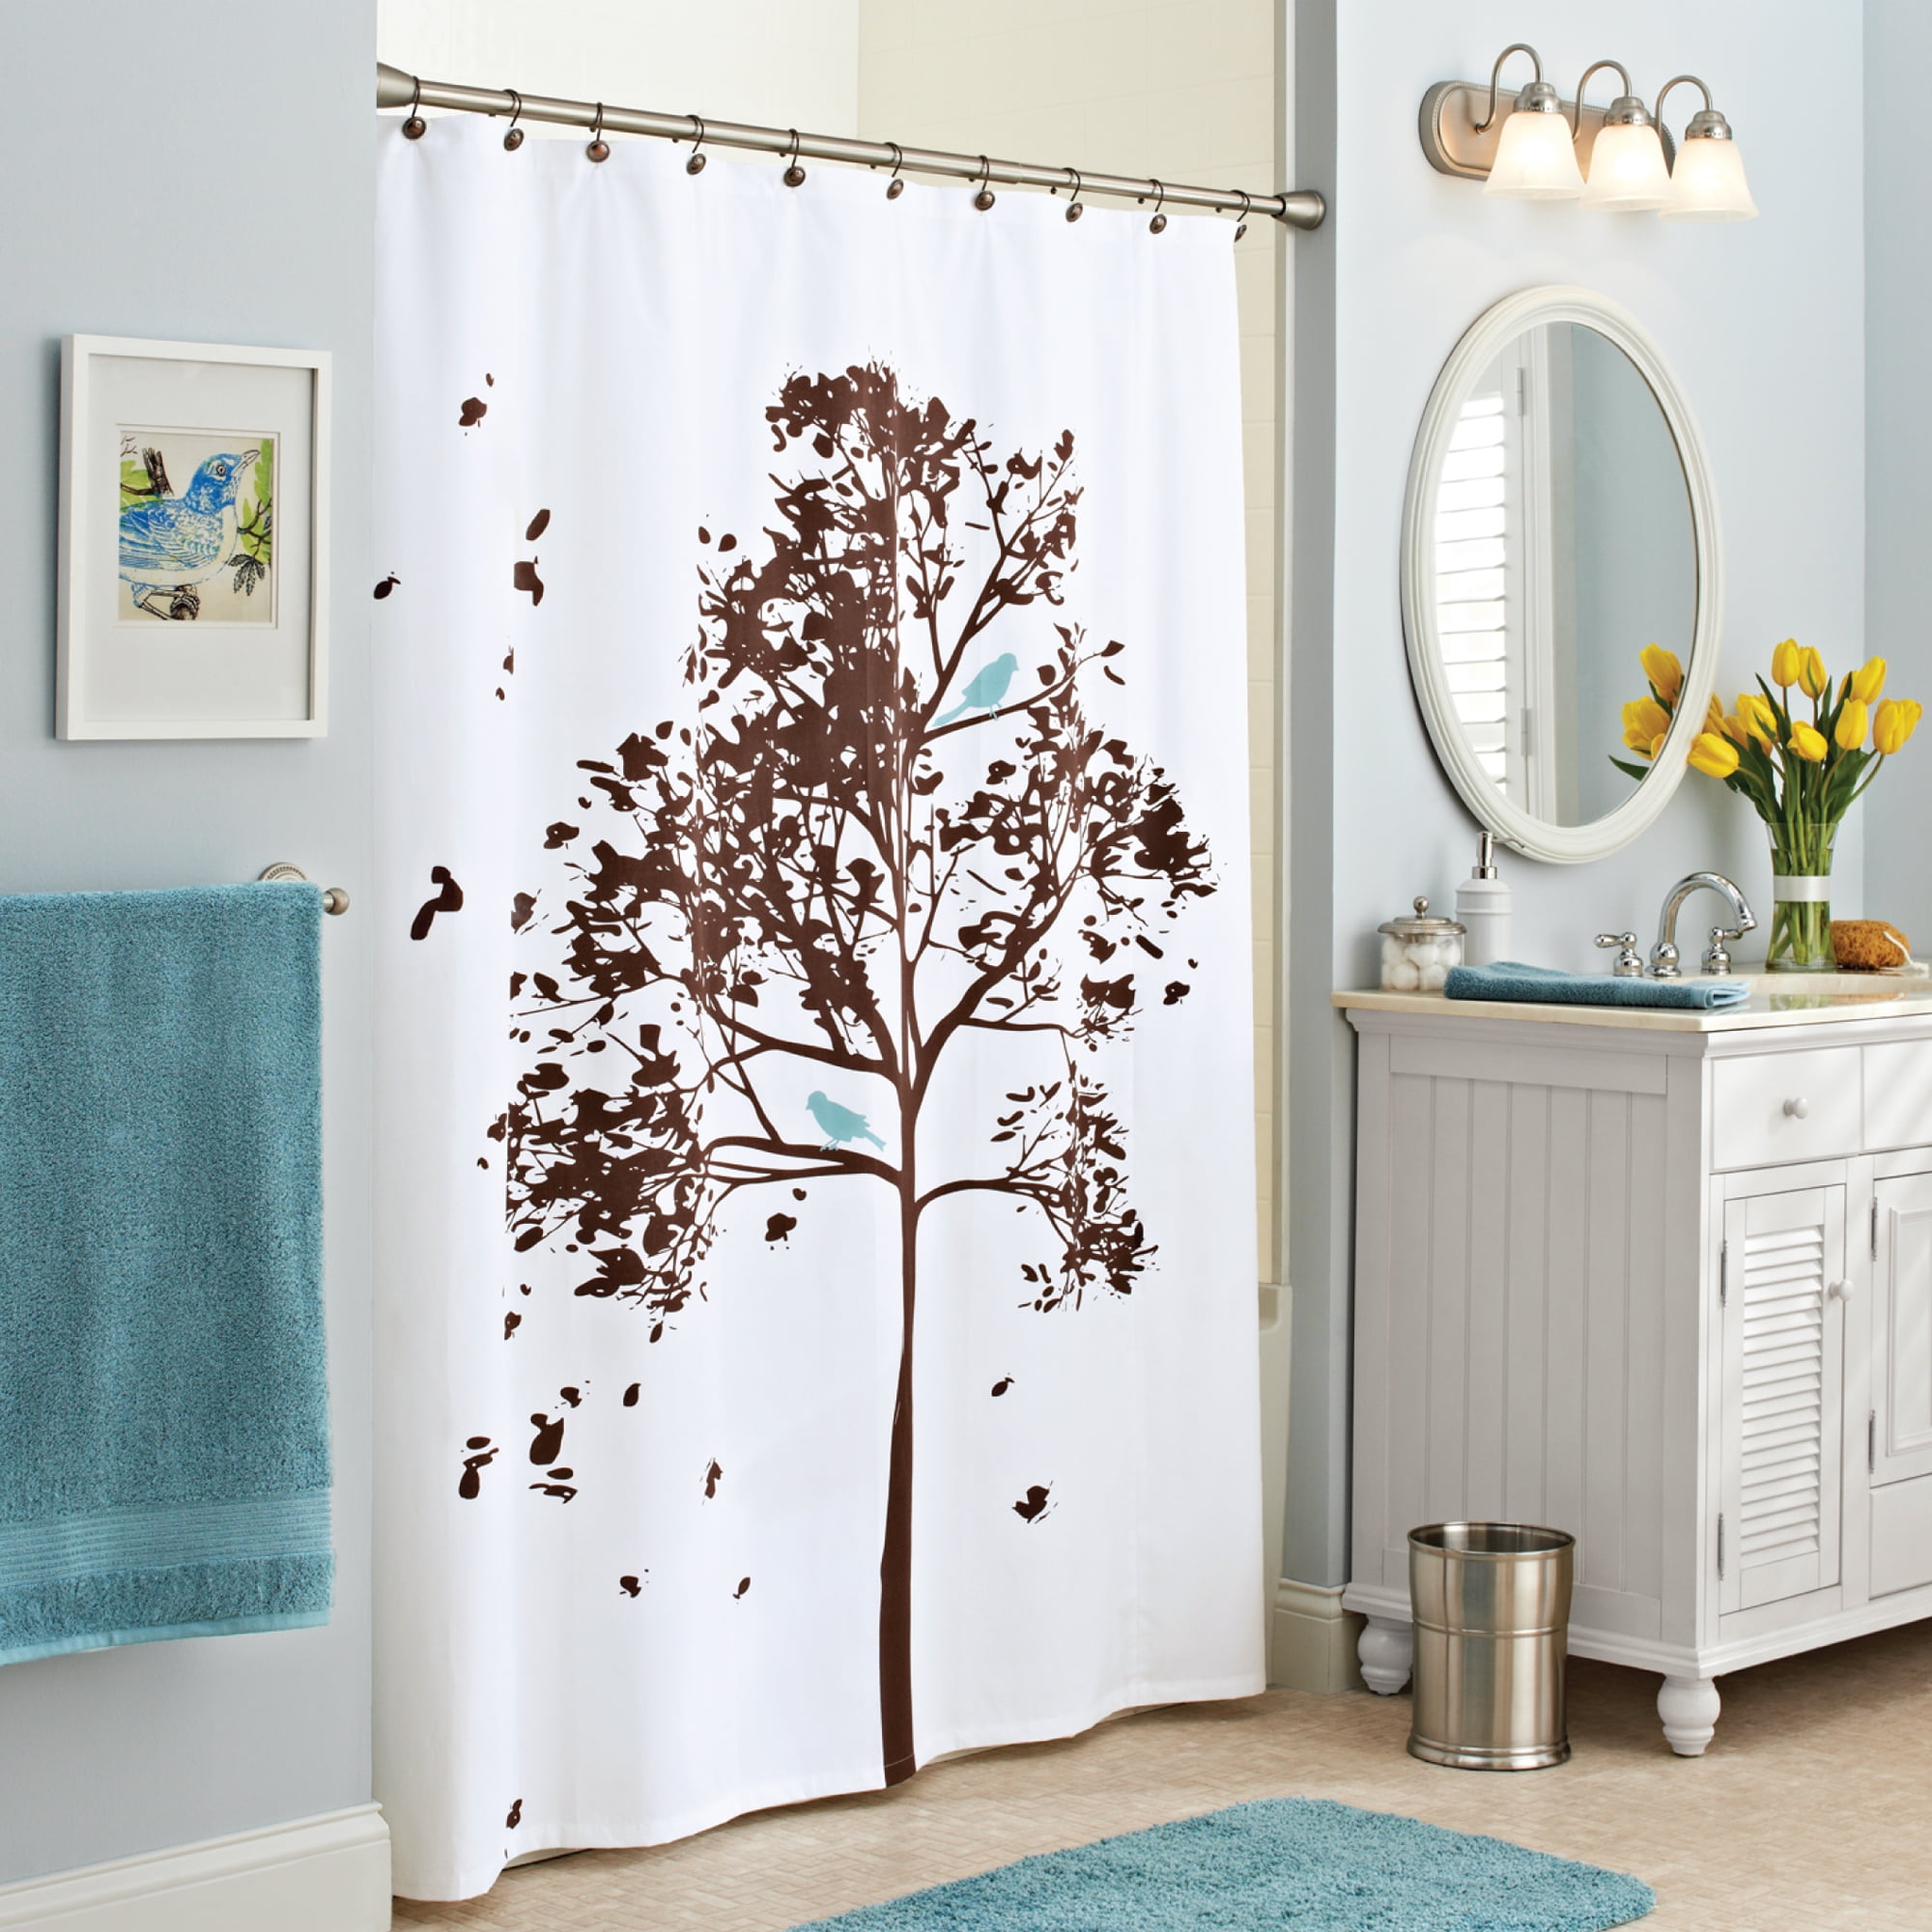 Black Tree Scenery Bathroom Fabric Shower Curtain w/ 12 Hooks Home Decor Gift 